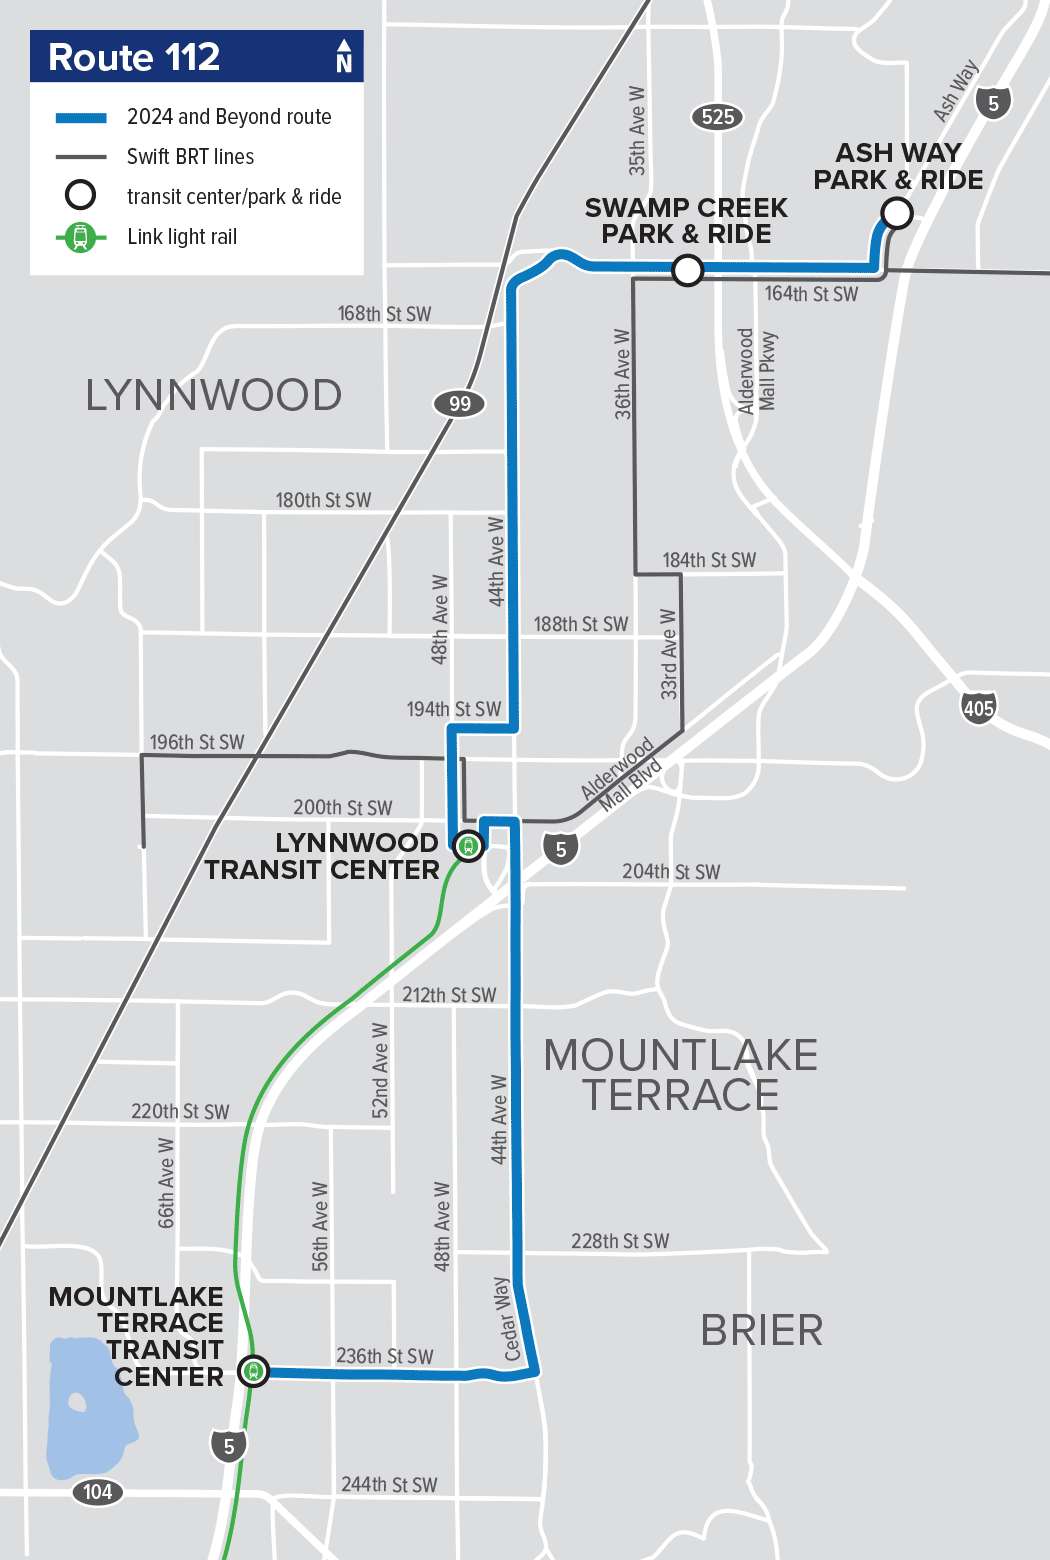 Route 112: Ash Way – Mountlake Terrace (increased frequency)